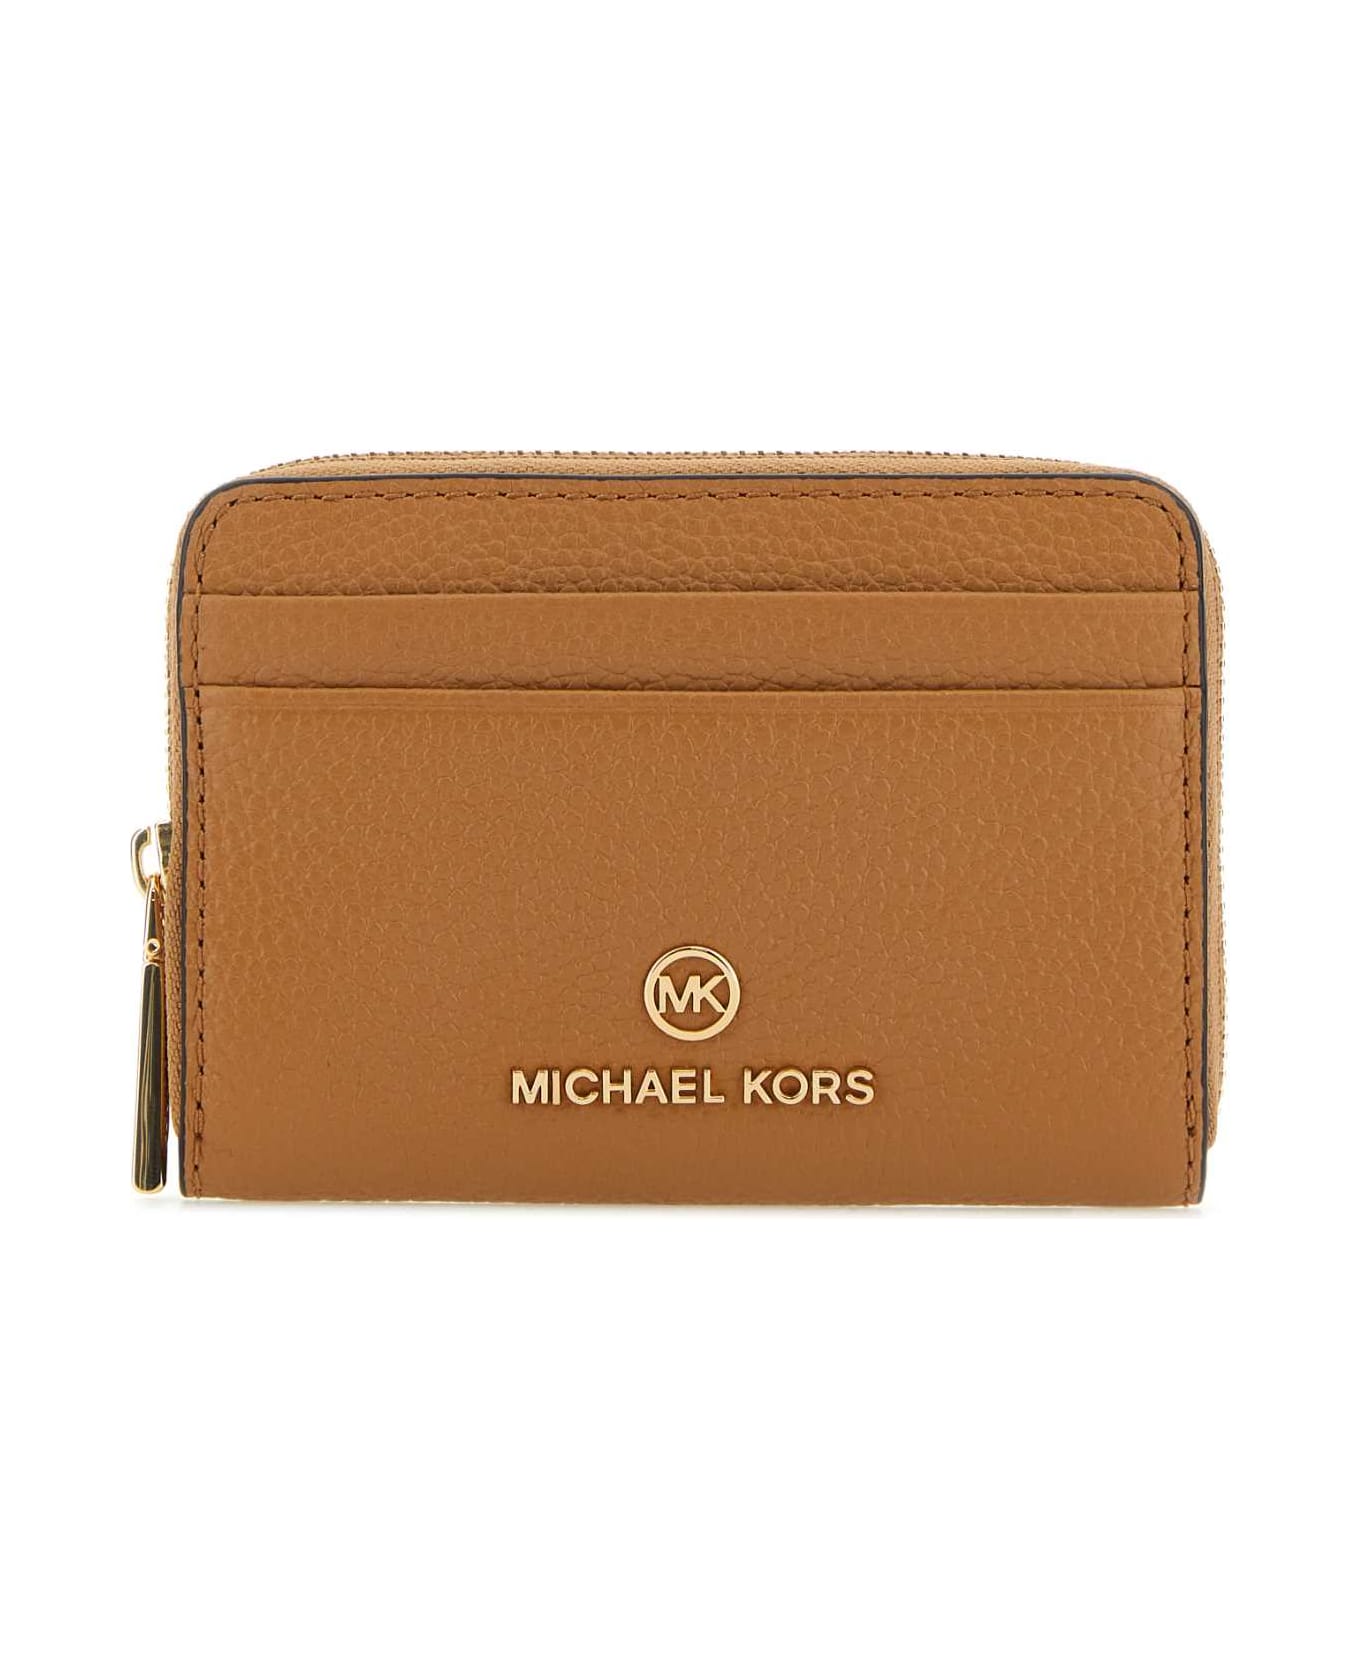 Michael Kors Camel Leather Wallet - PALEPEANUT 財布